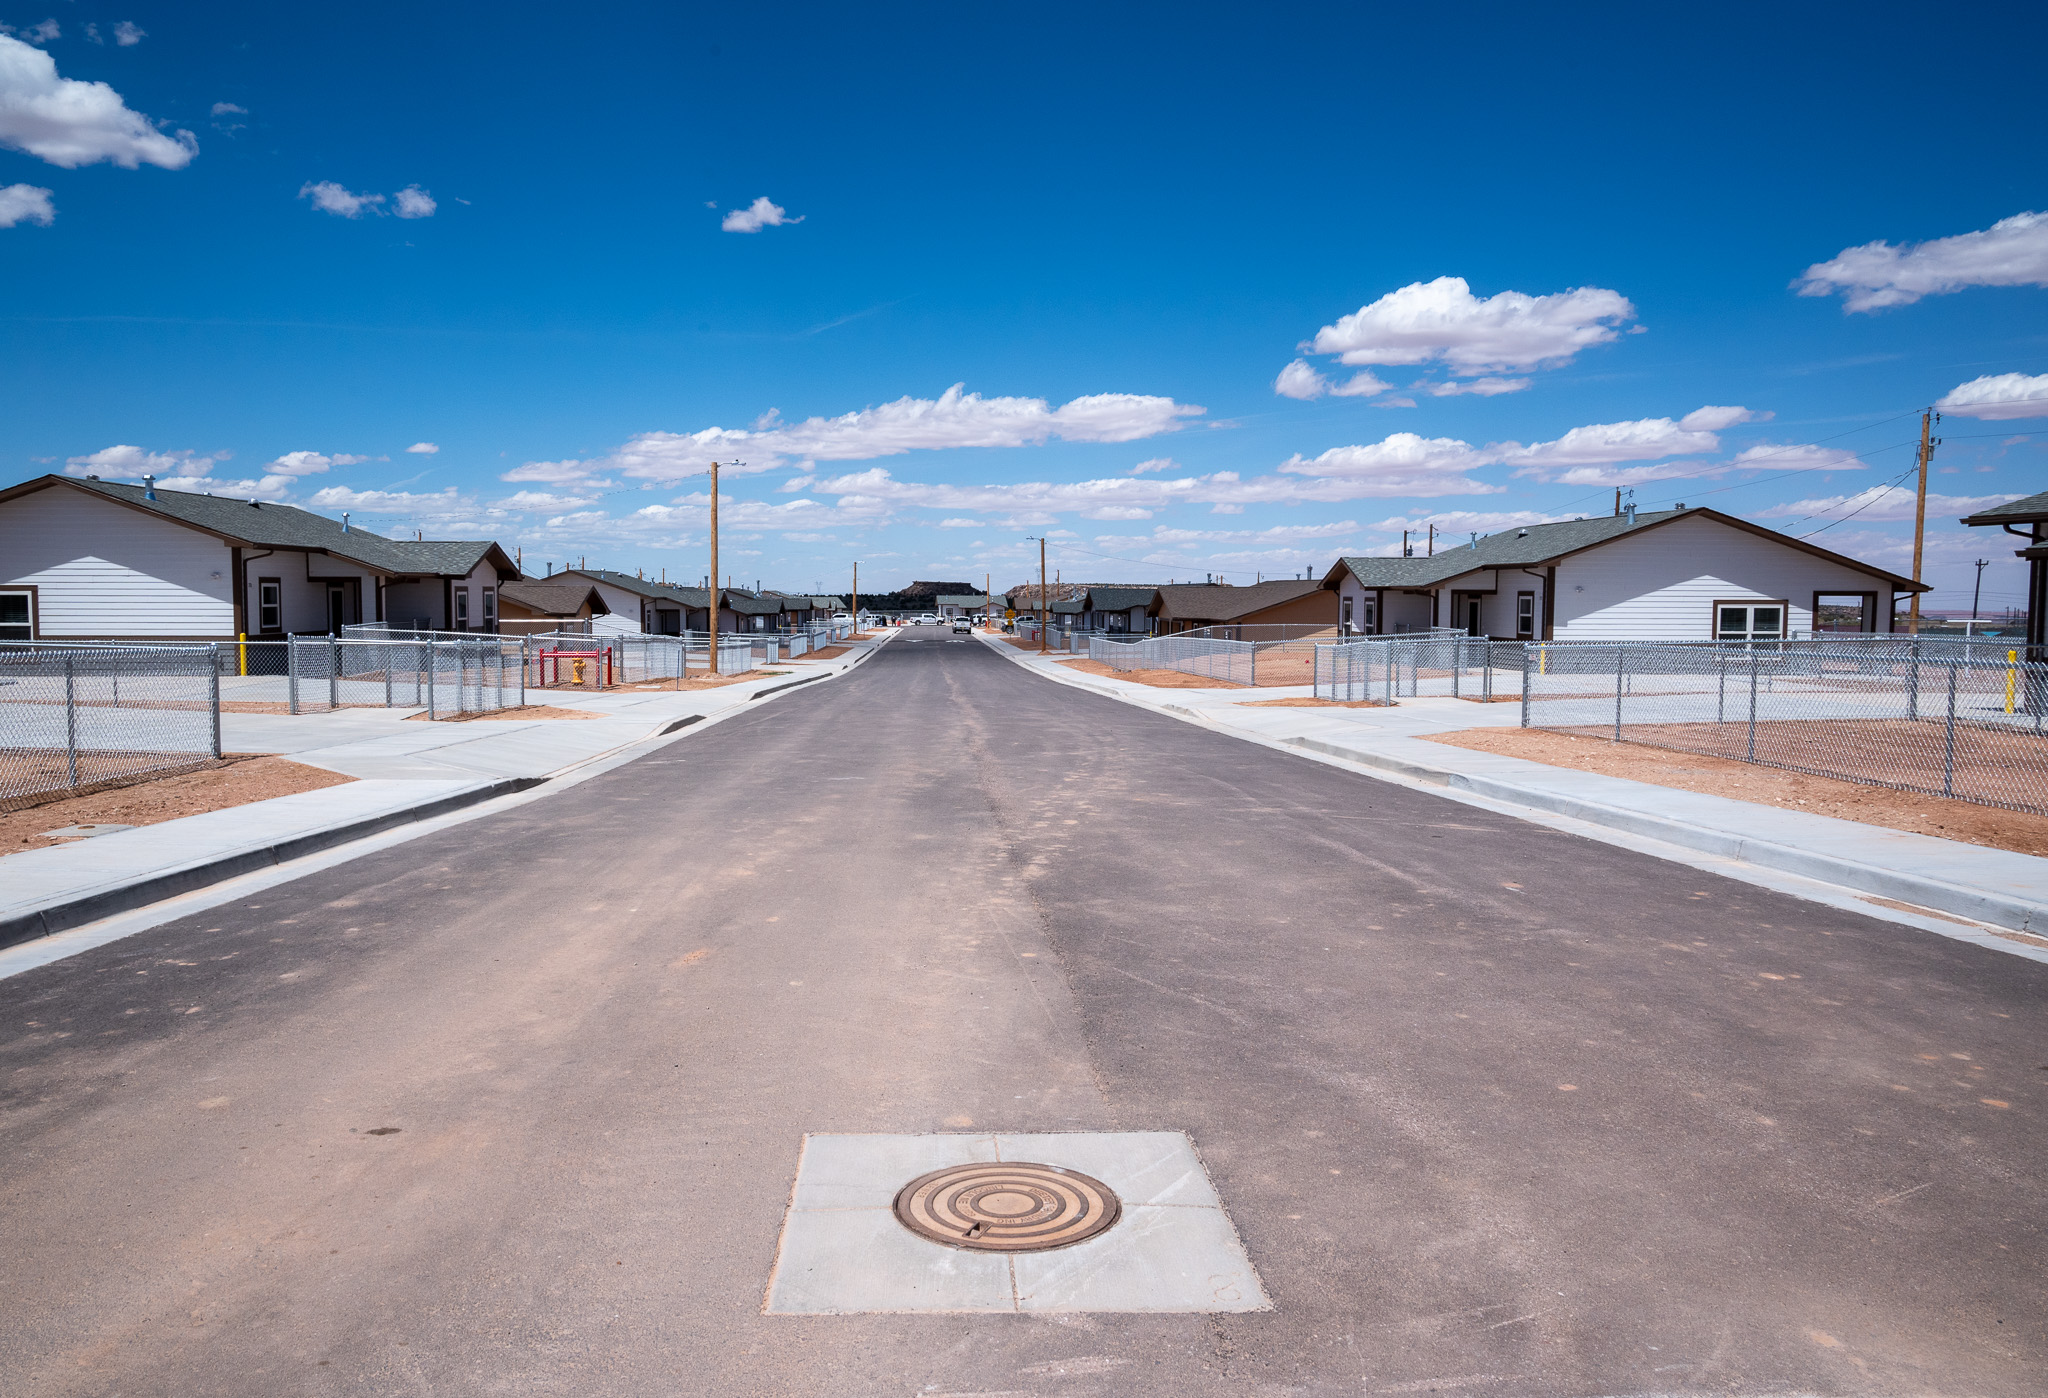 Newly finished housing development in Lukachukai, Arizona